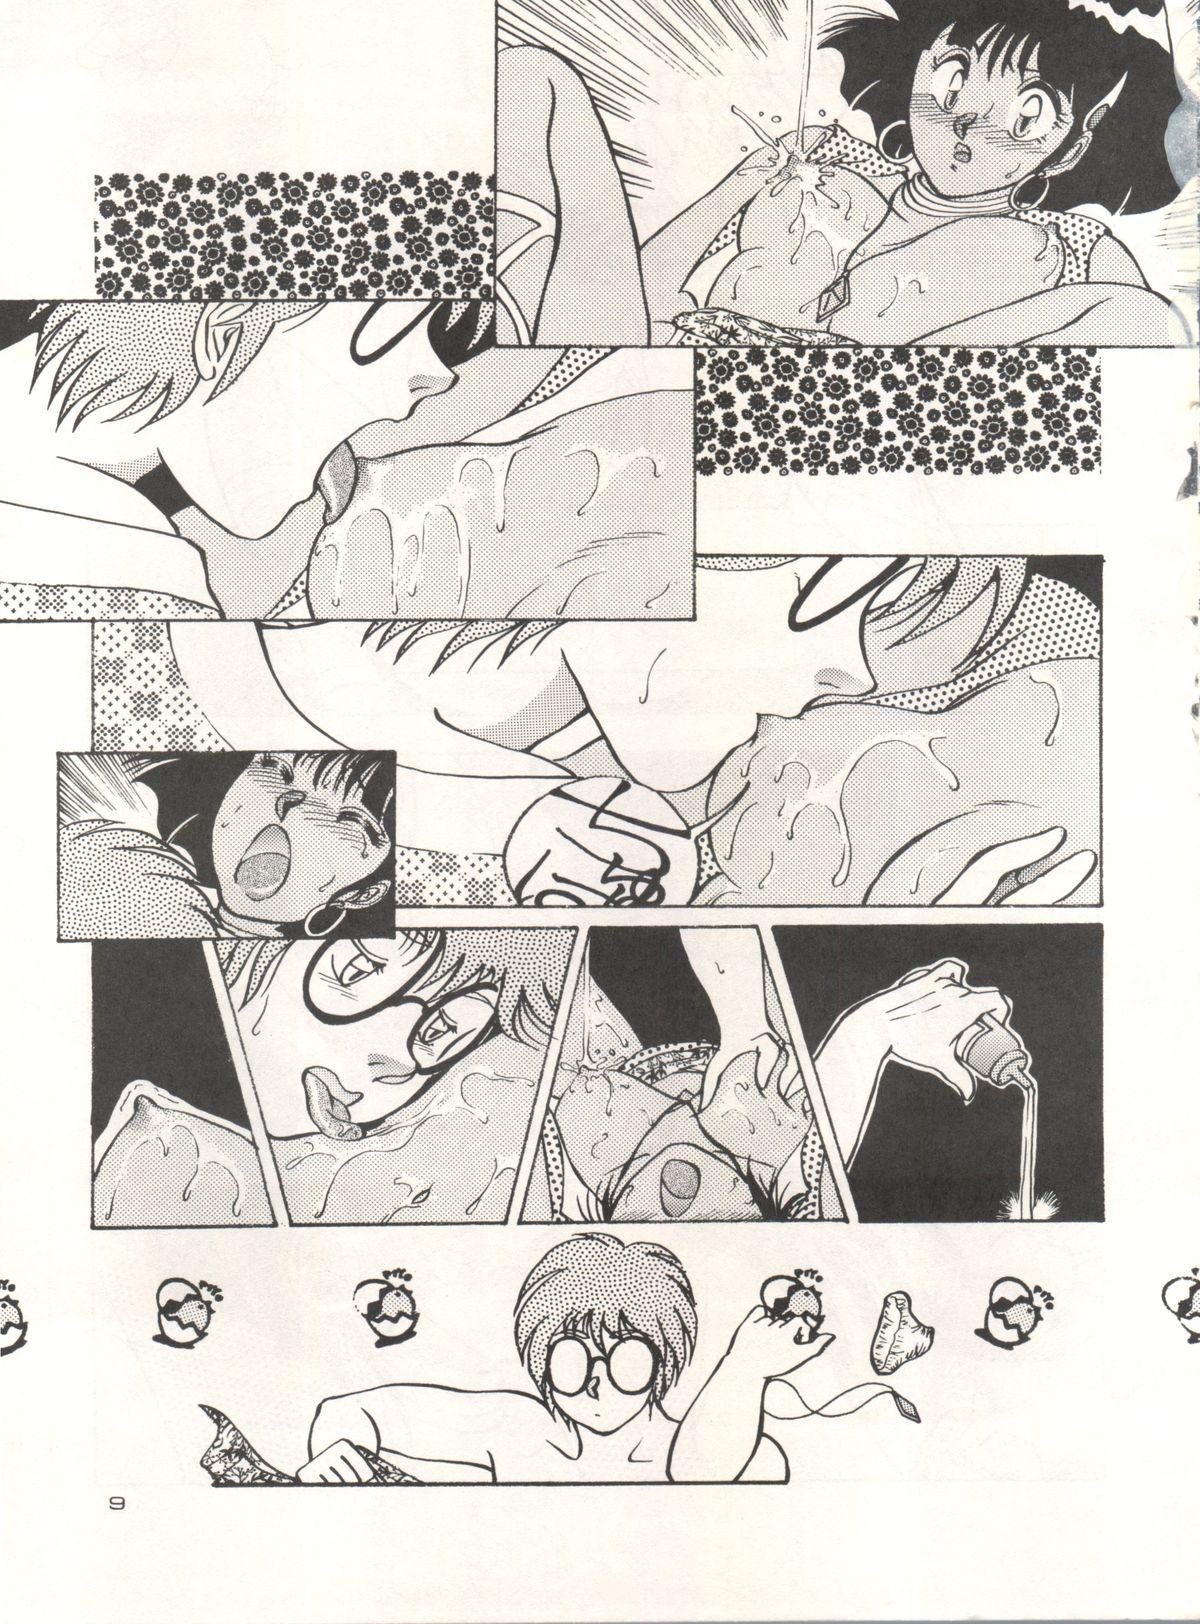 Free Fucking Nadia Girls in Emerald Sea vol. 2 - Minies Club 23 - Fushigi no umi no nadia Romance - Page 9